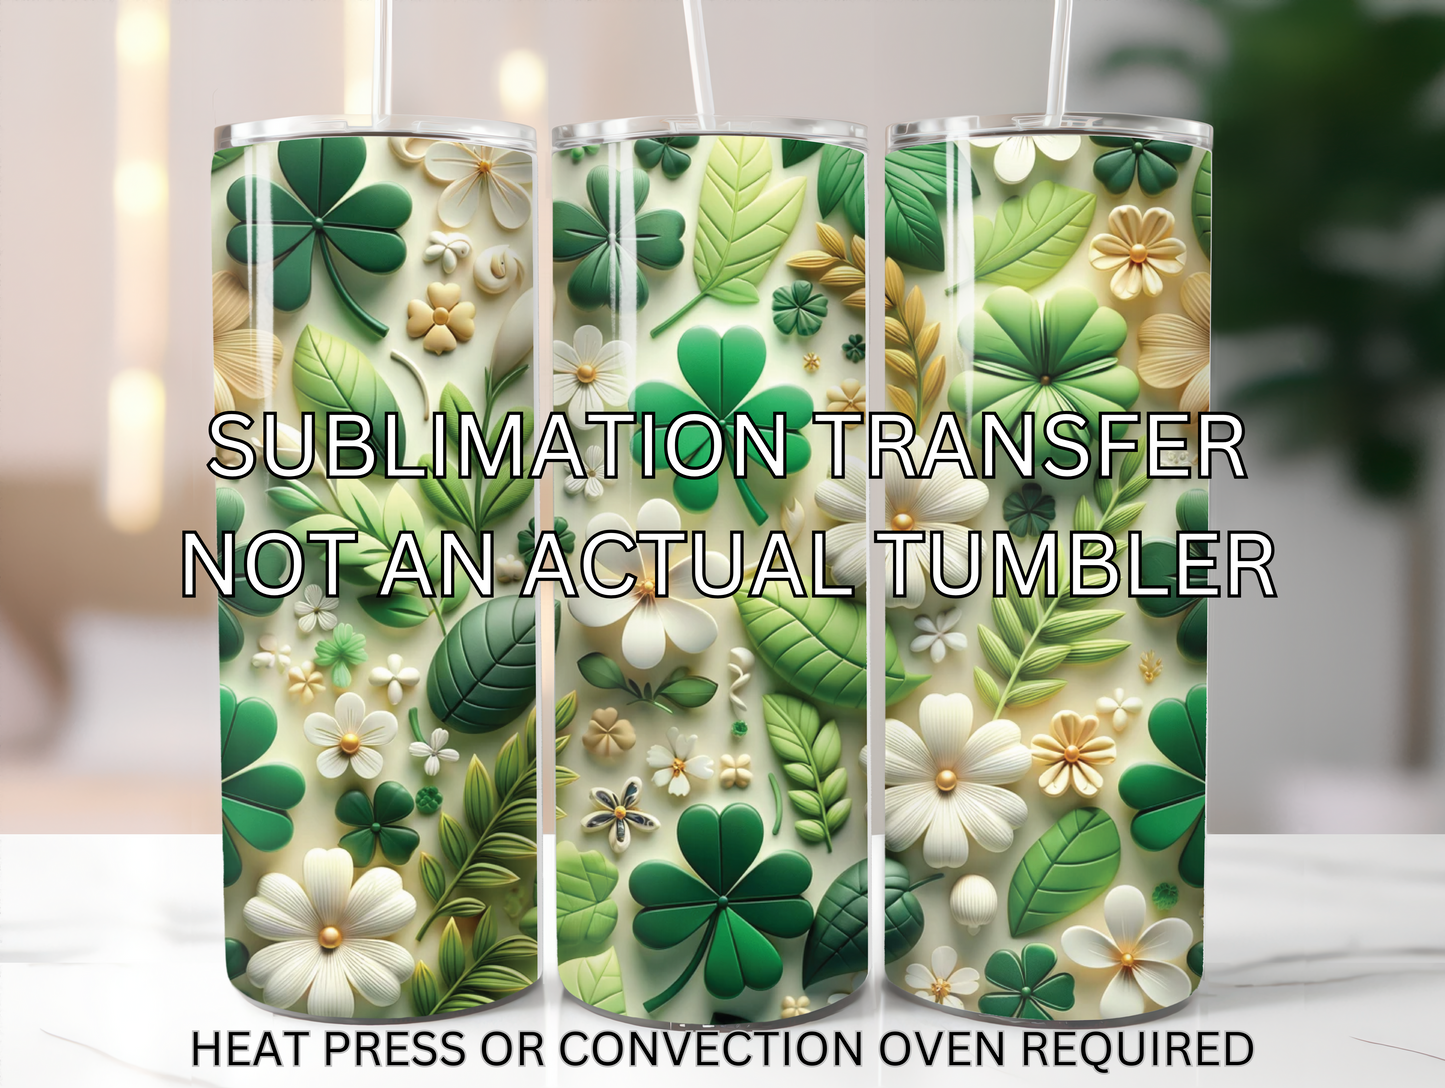 tumbler sublimation transfer - 3D effect shamrocks